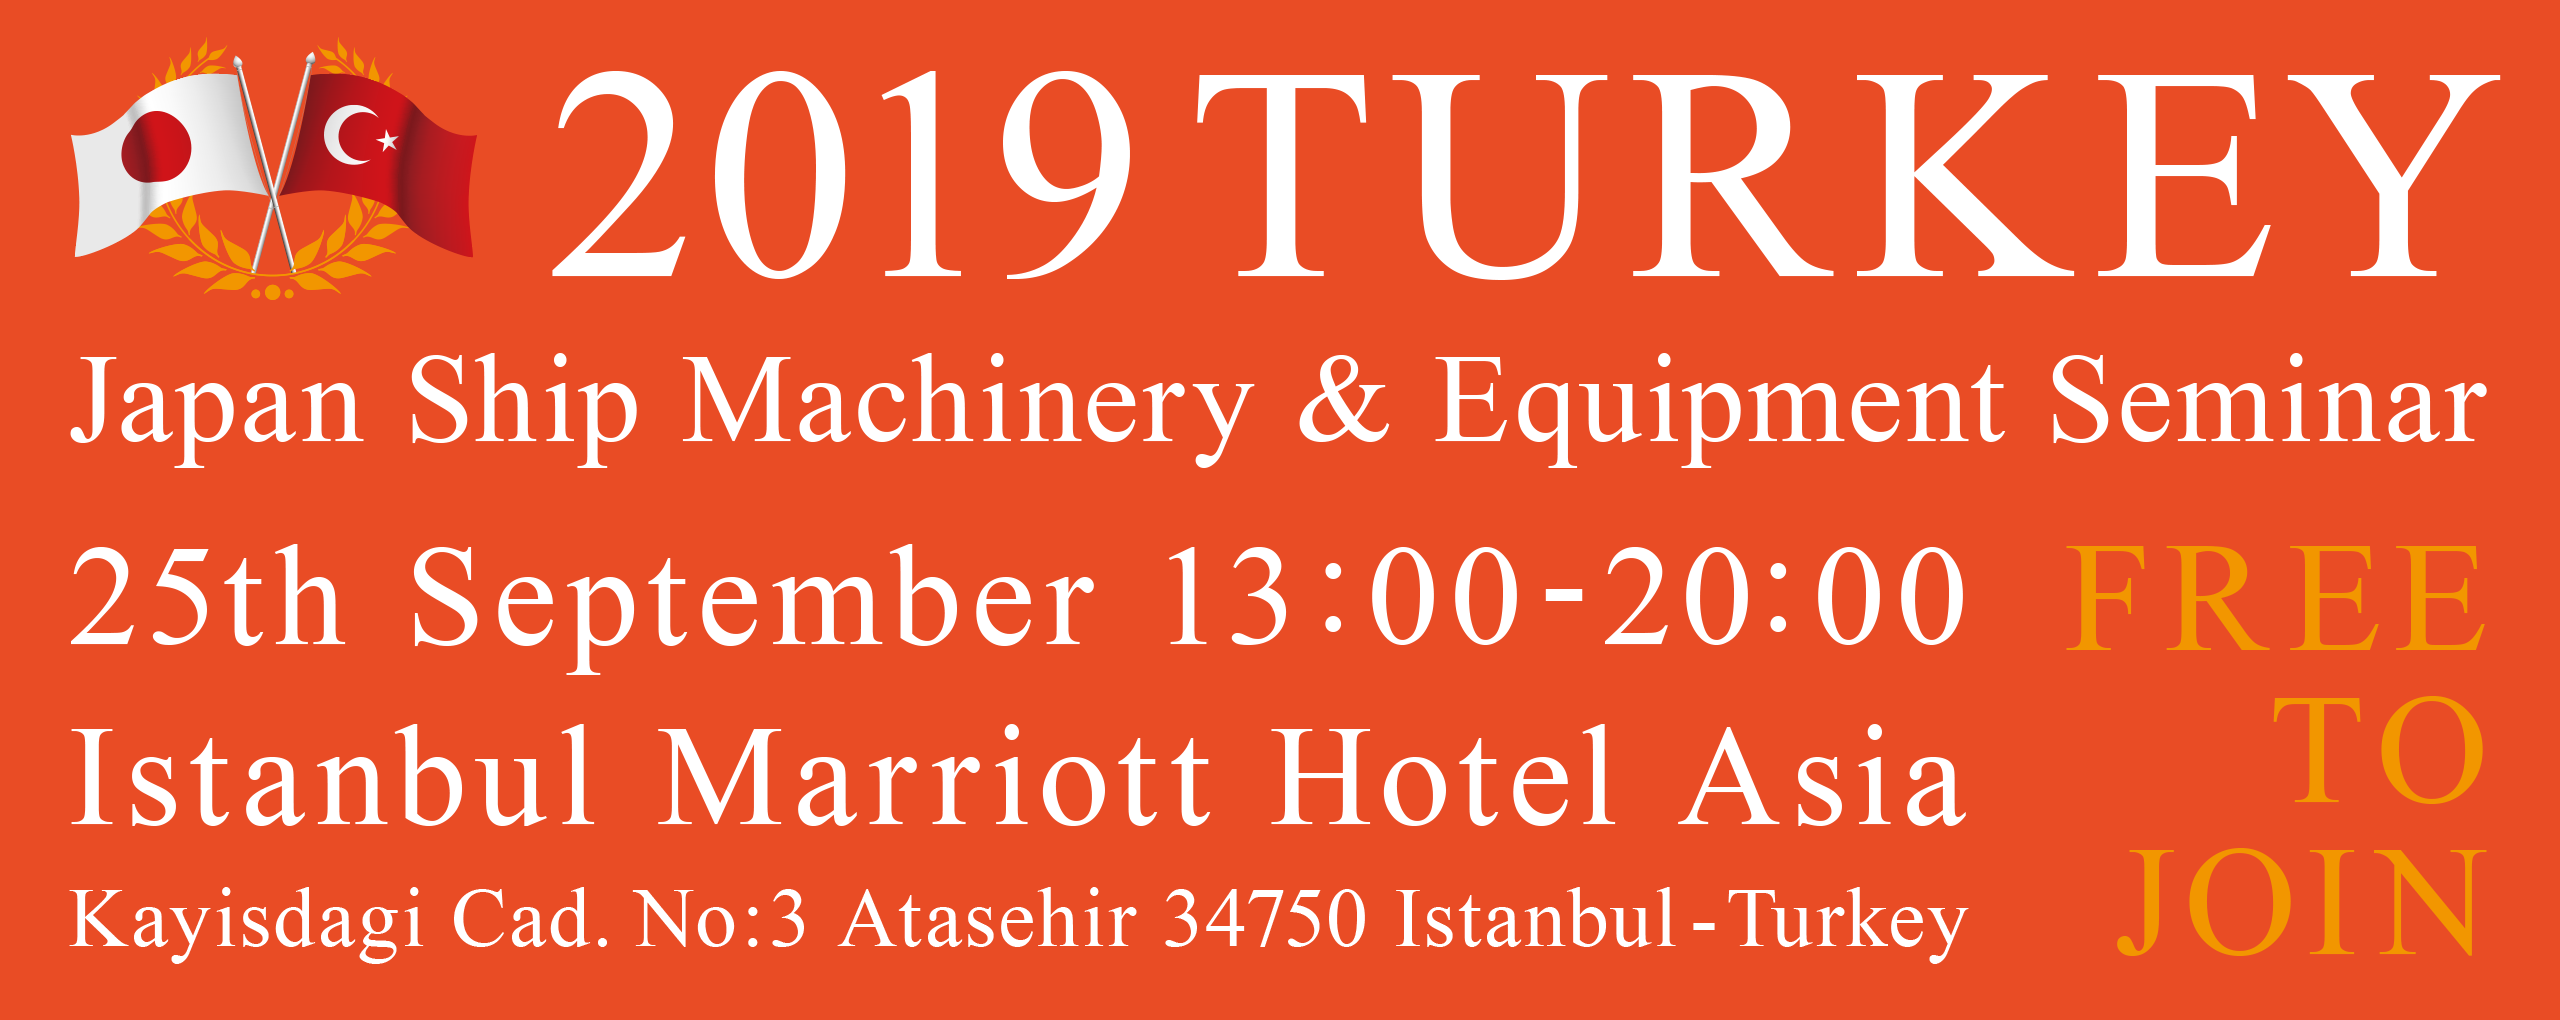 2019 TURKEY Japan Ship Machinery & Equipment Seminar 25th September 13:00-20:00 Istanbul Marriott Hotel Asia Kayisdagi Cad. No:3 Atasehir 34750 Istanbul - Turkey